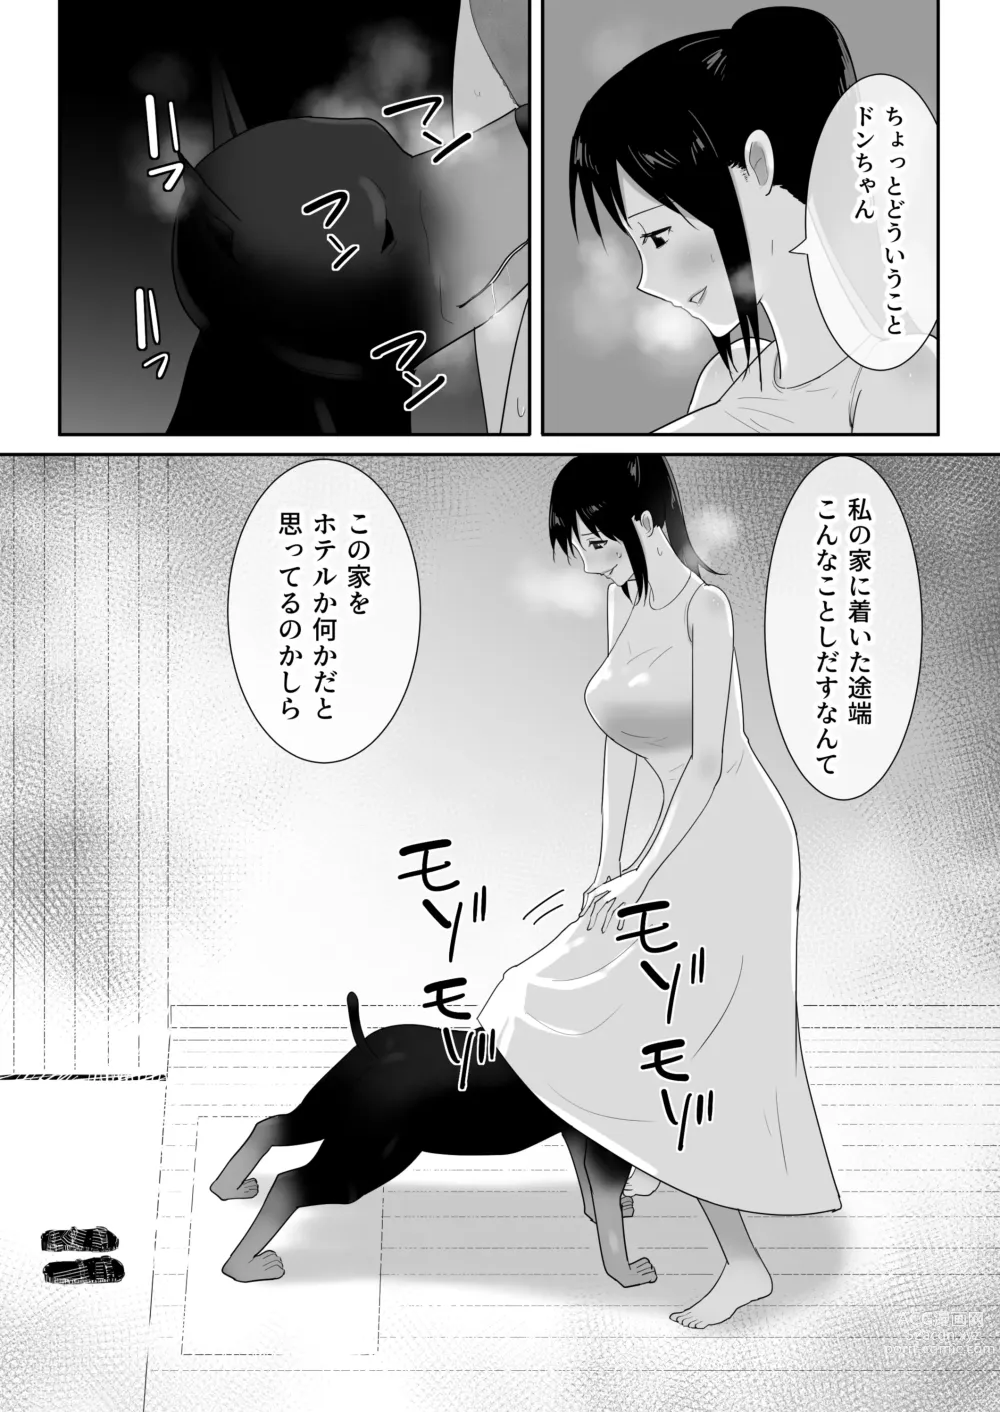 Page 14 of doujinshi Wagaya ni Inu ga Yattekita